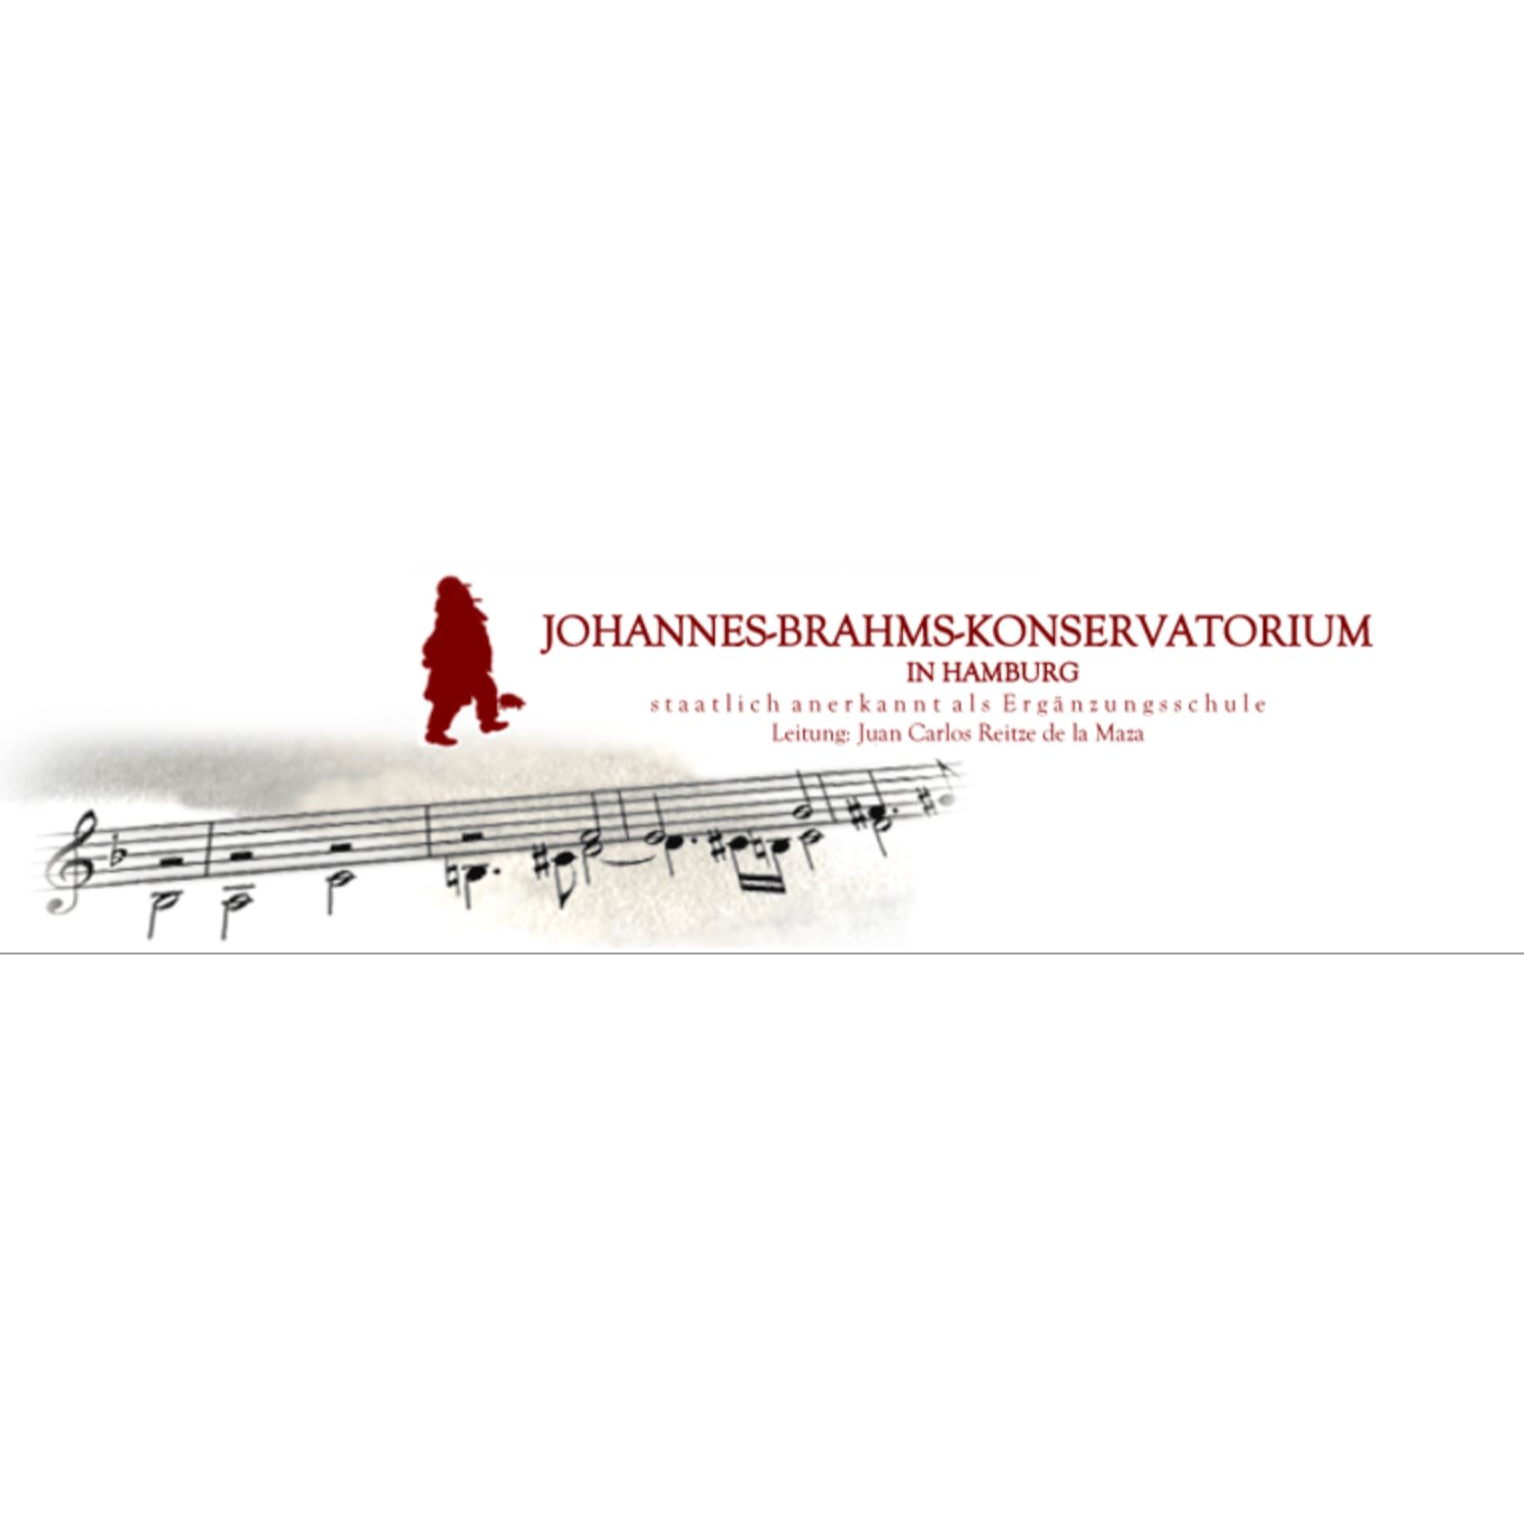 Johannes-Brahms-Konservatorium Logo